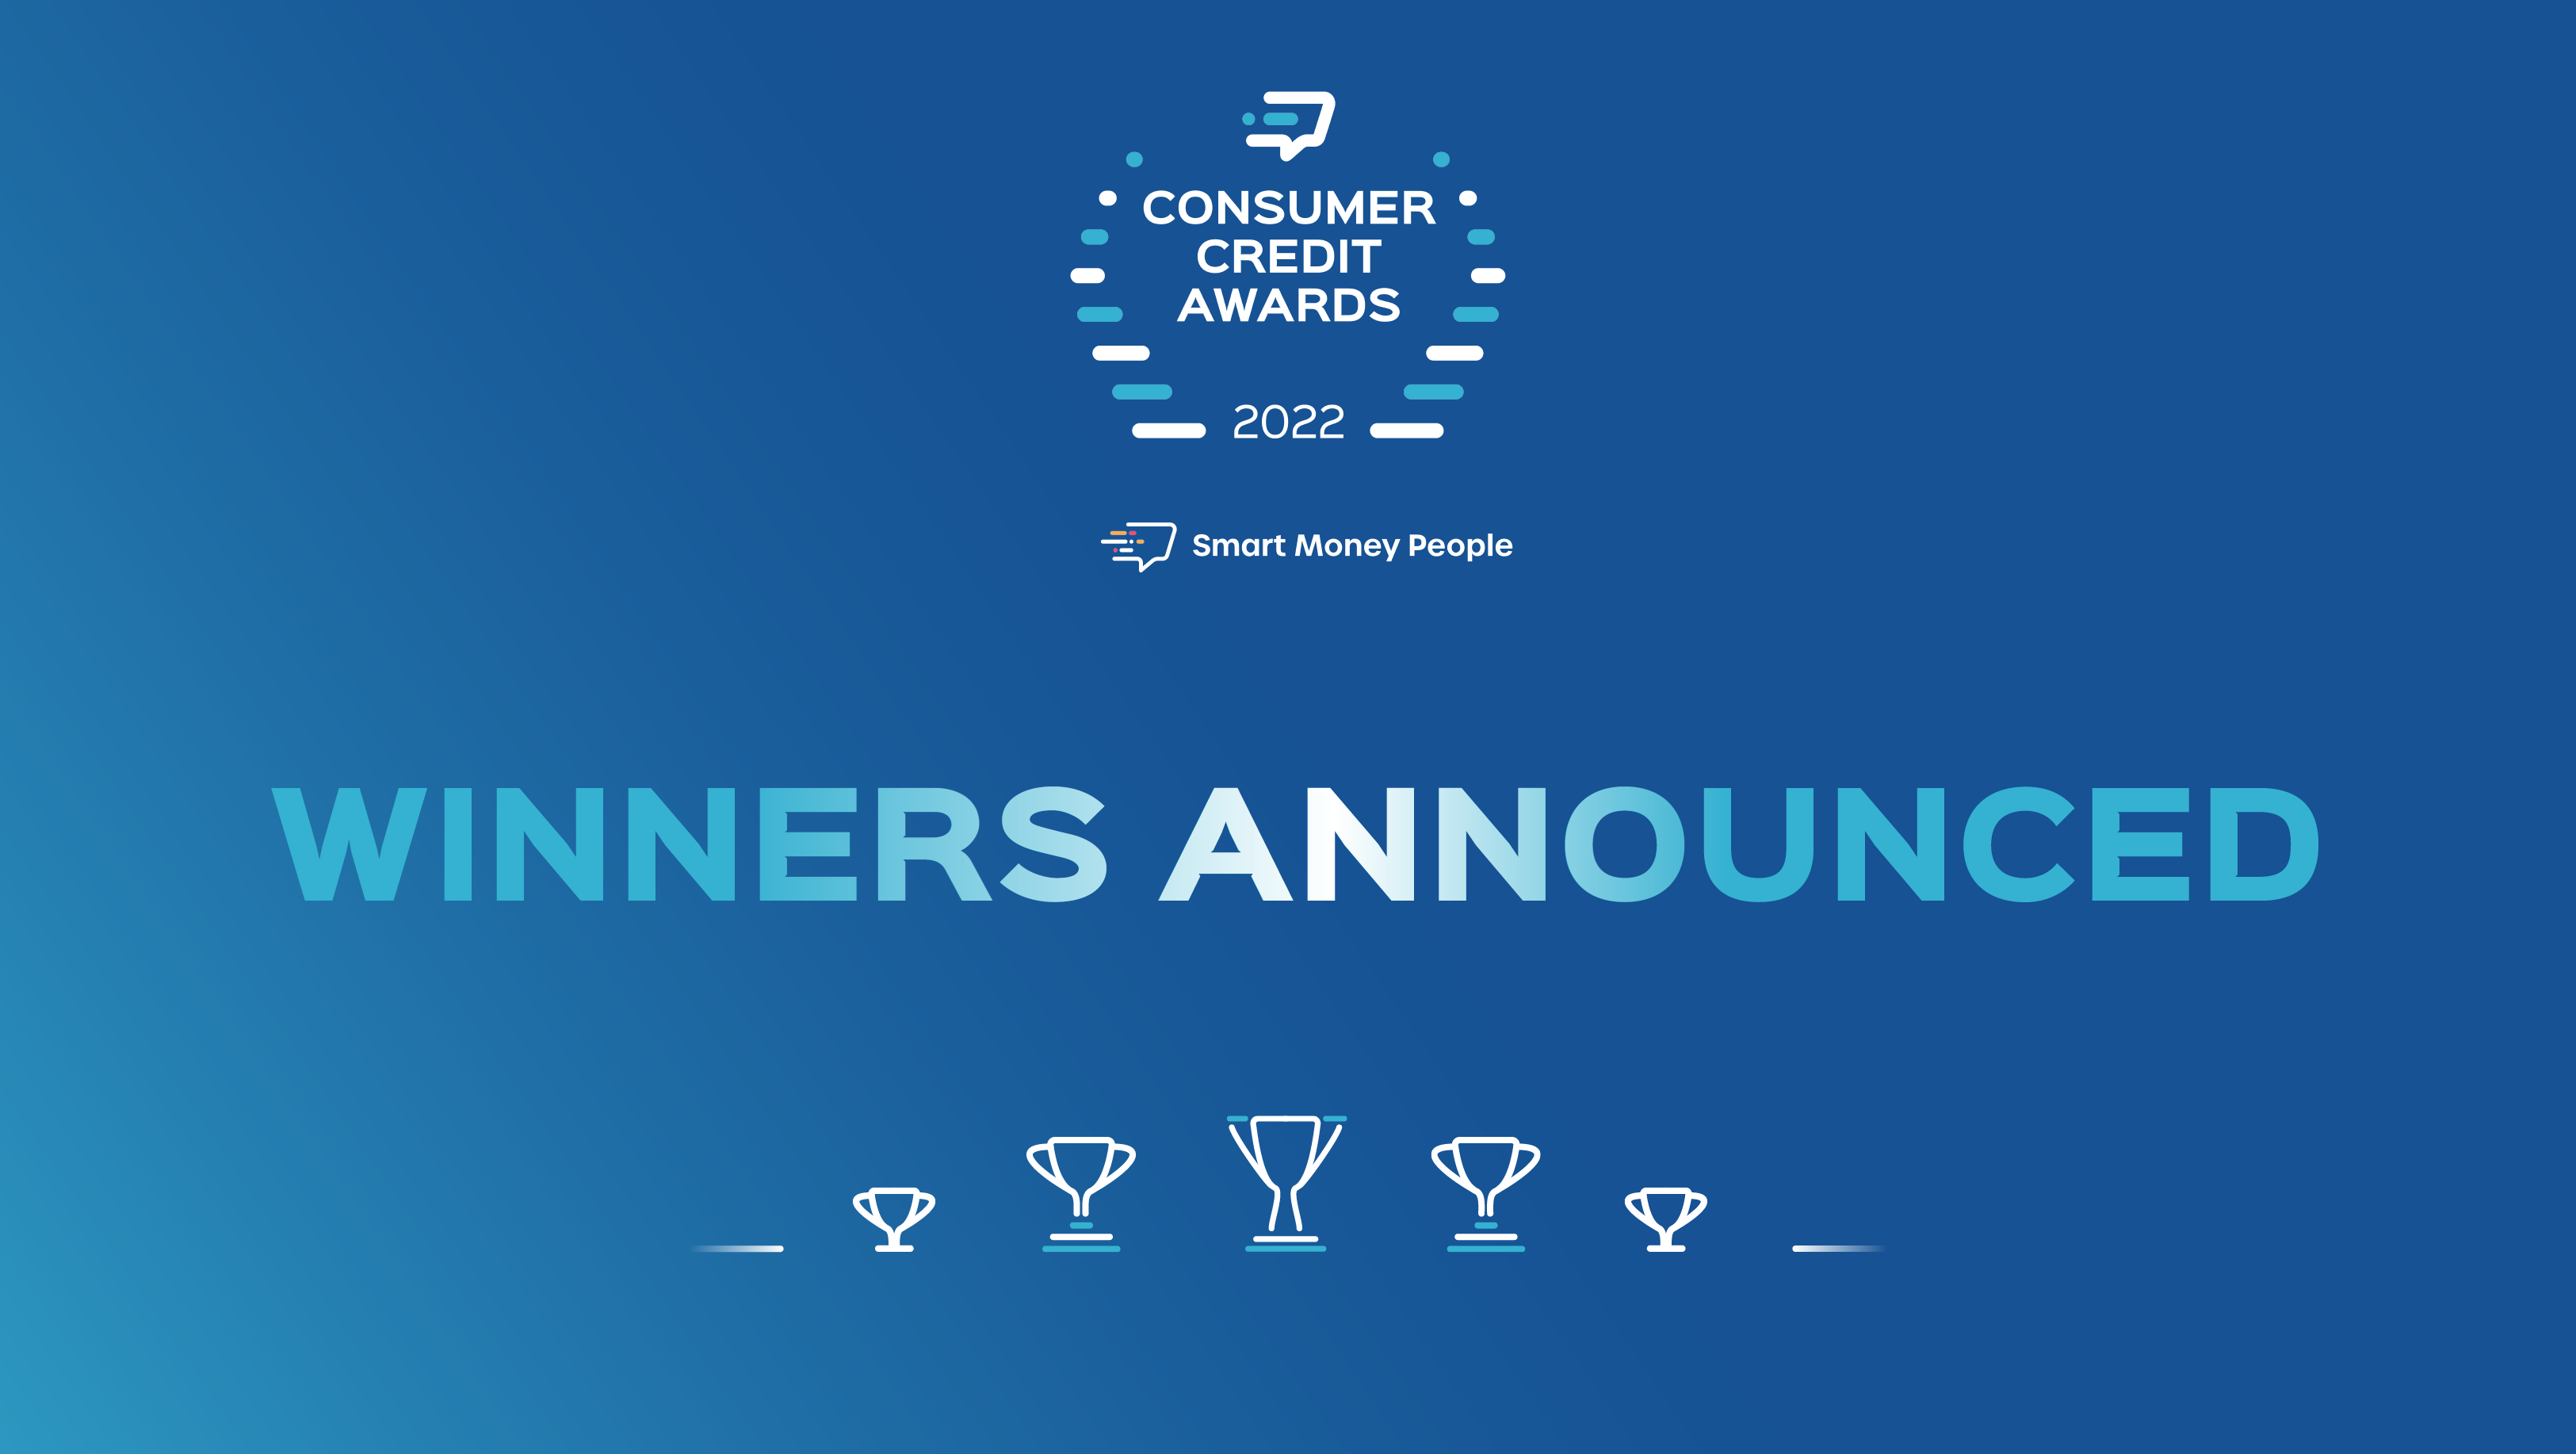 Consumer Credit Awards 2022 winners revealed!